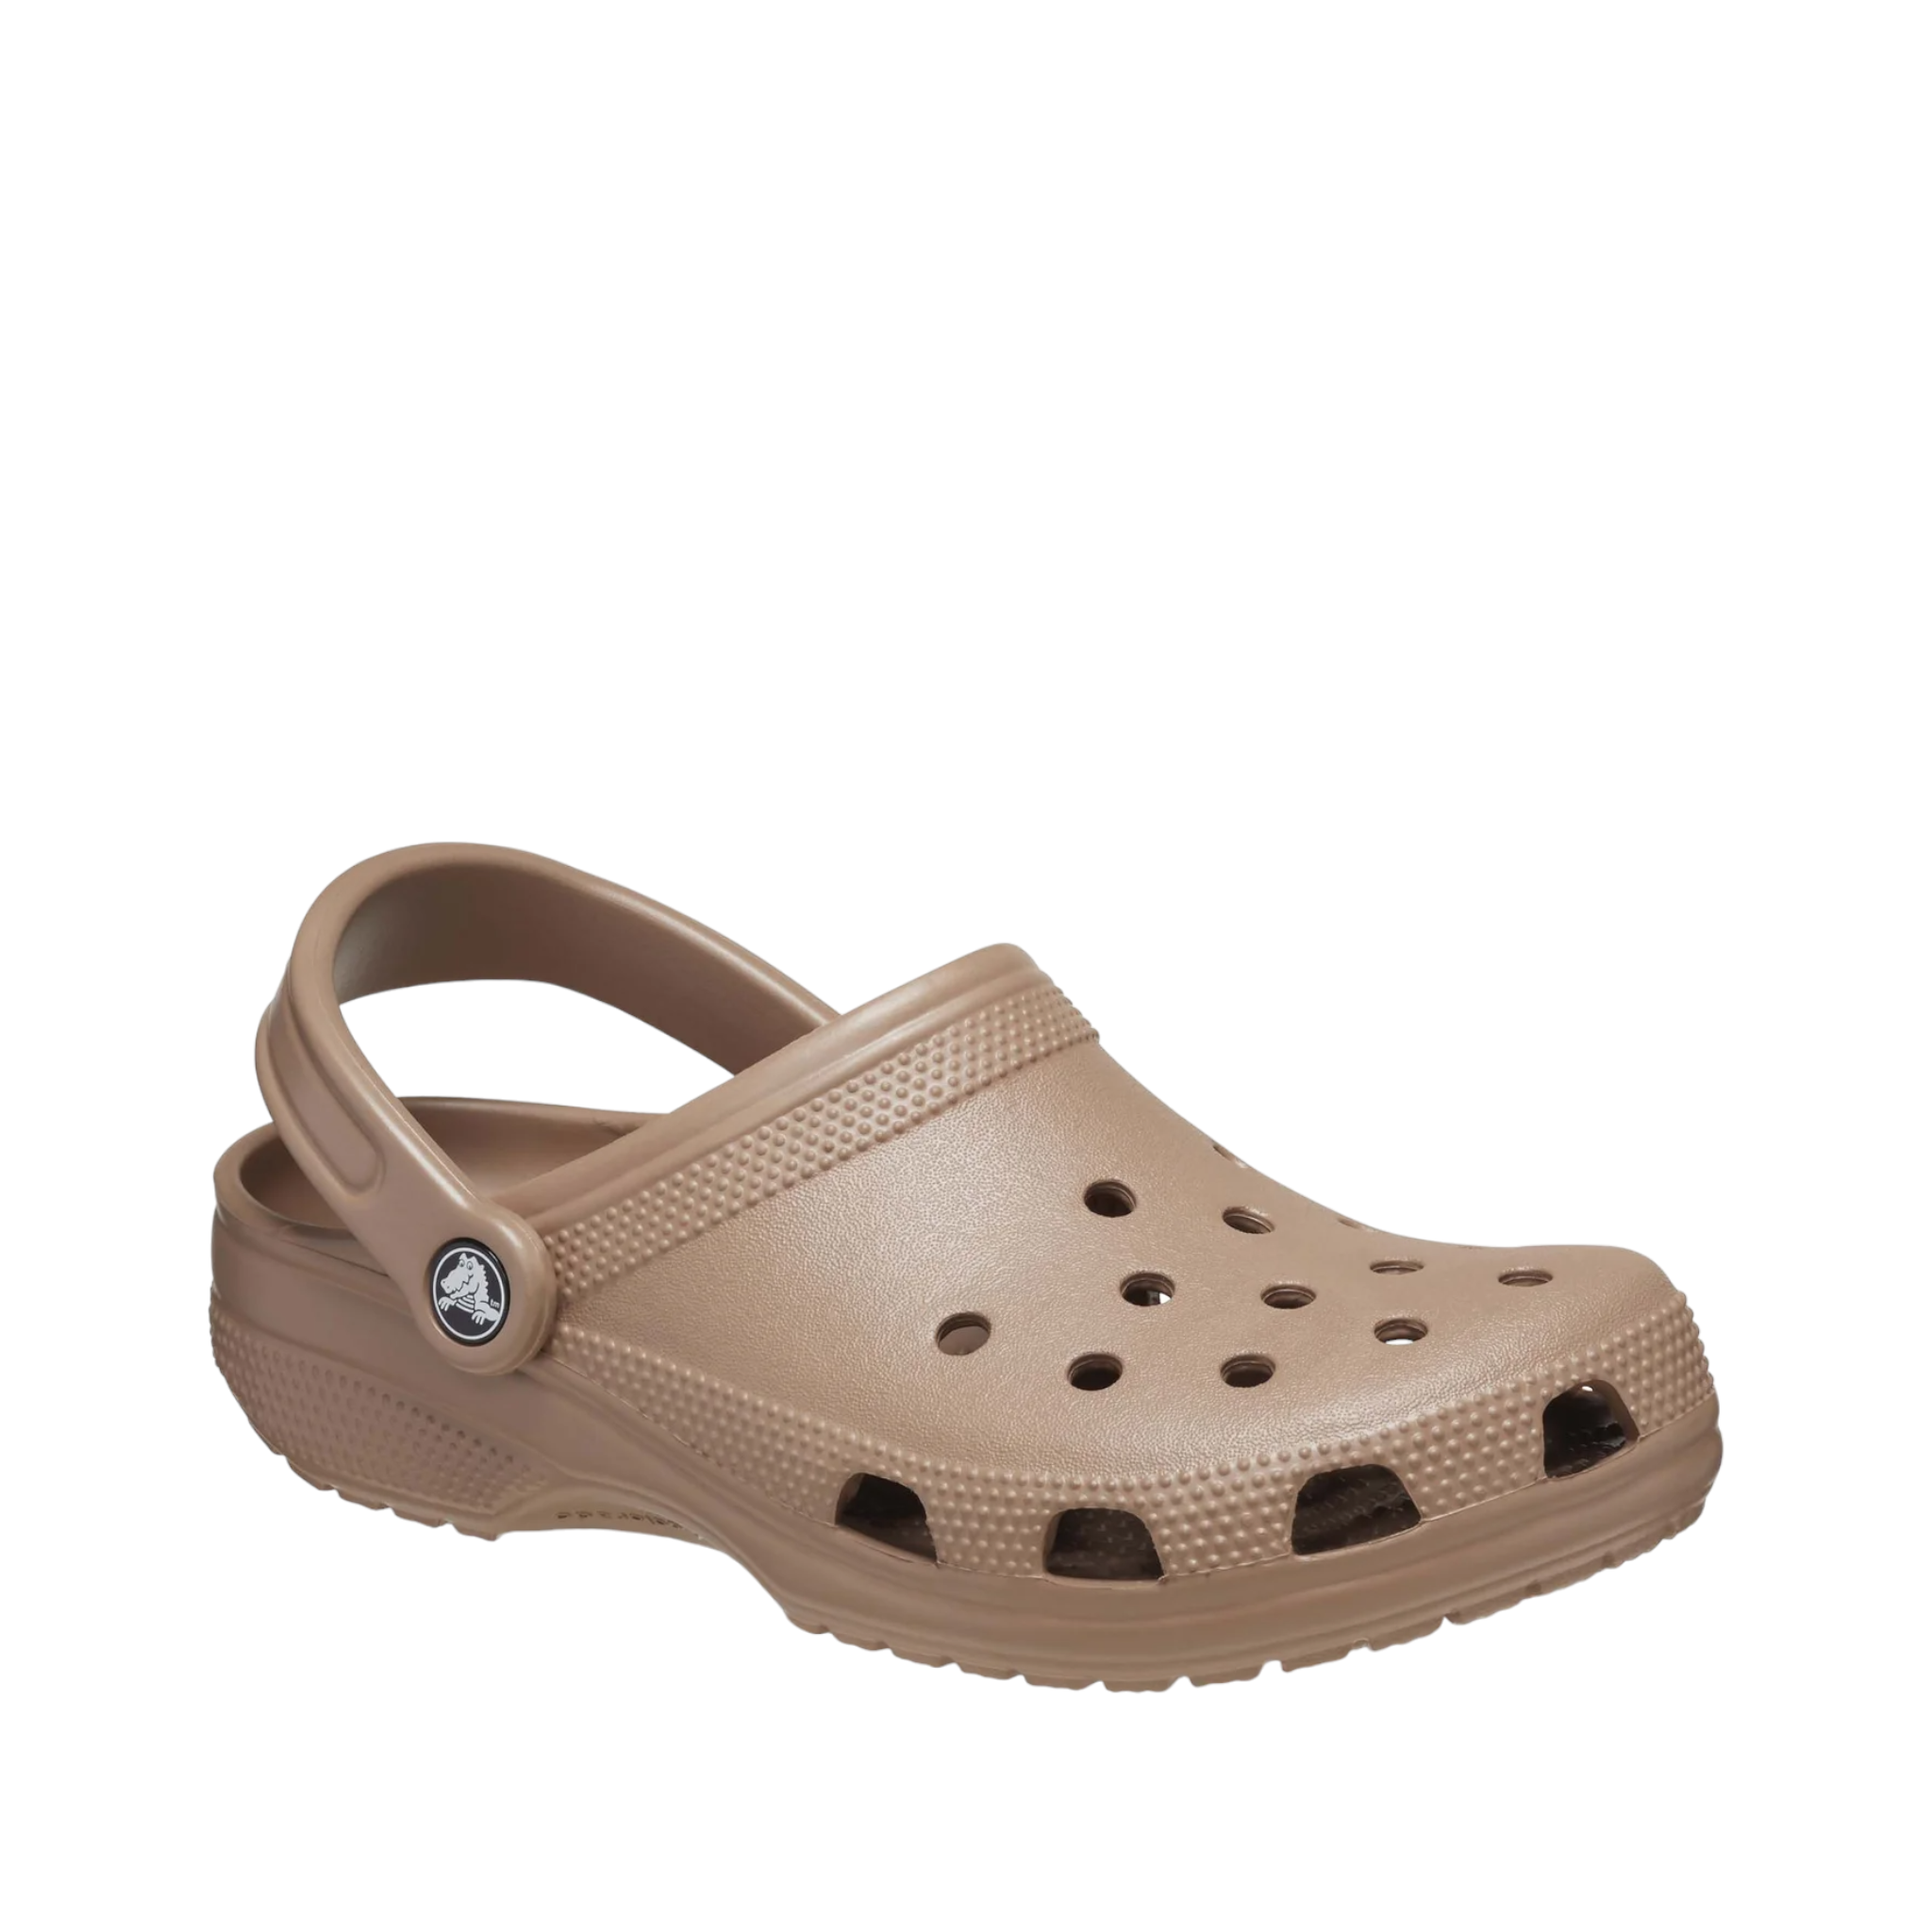 Shop Classic Clog Crocs - with shoe&amp;me - from Crocs - Clogs - Clog, Mens, Summer, Winter, Womens